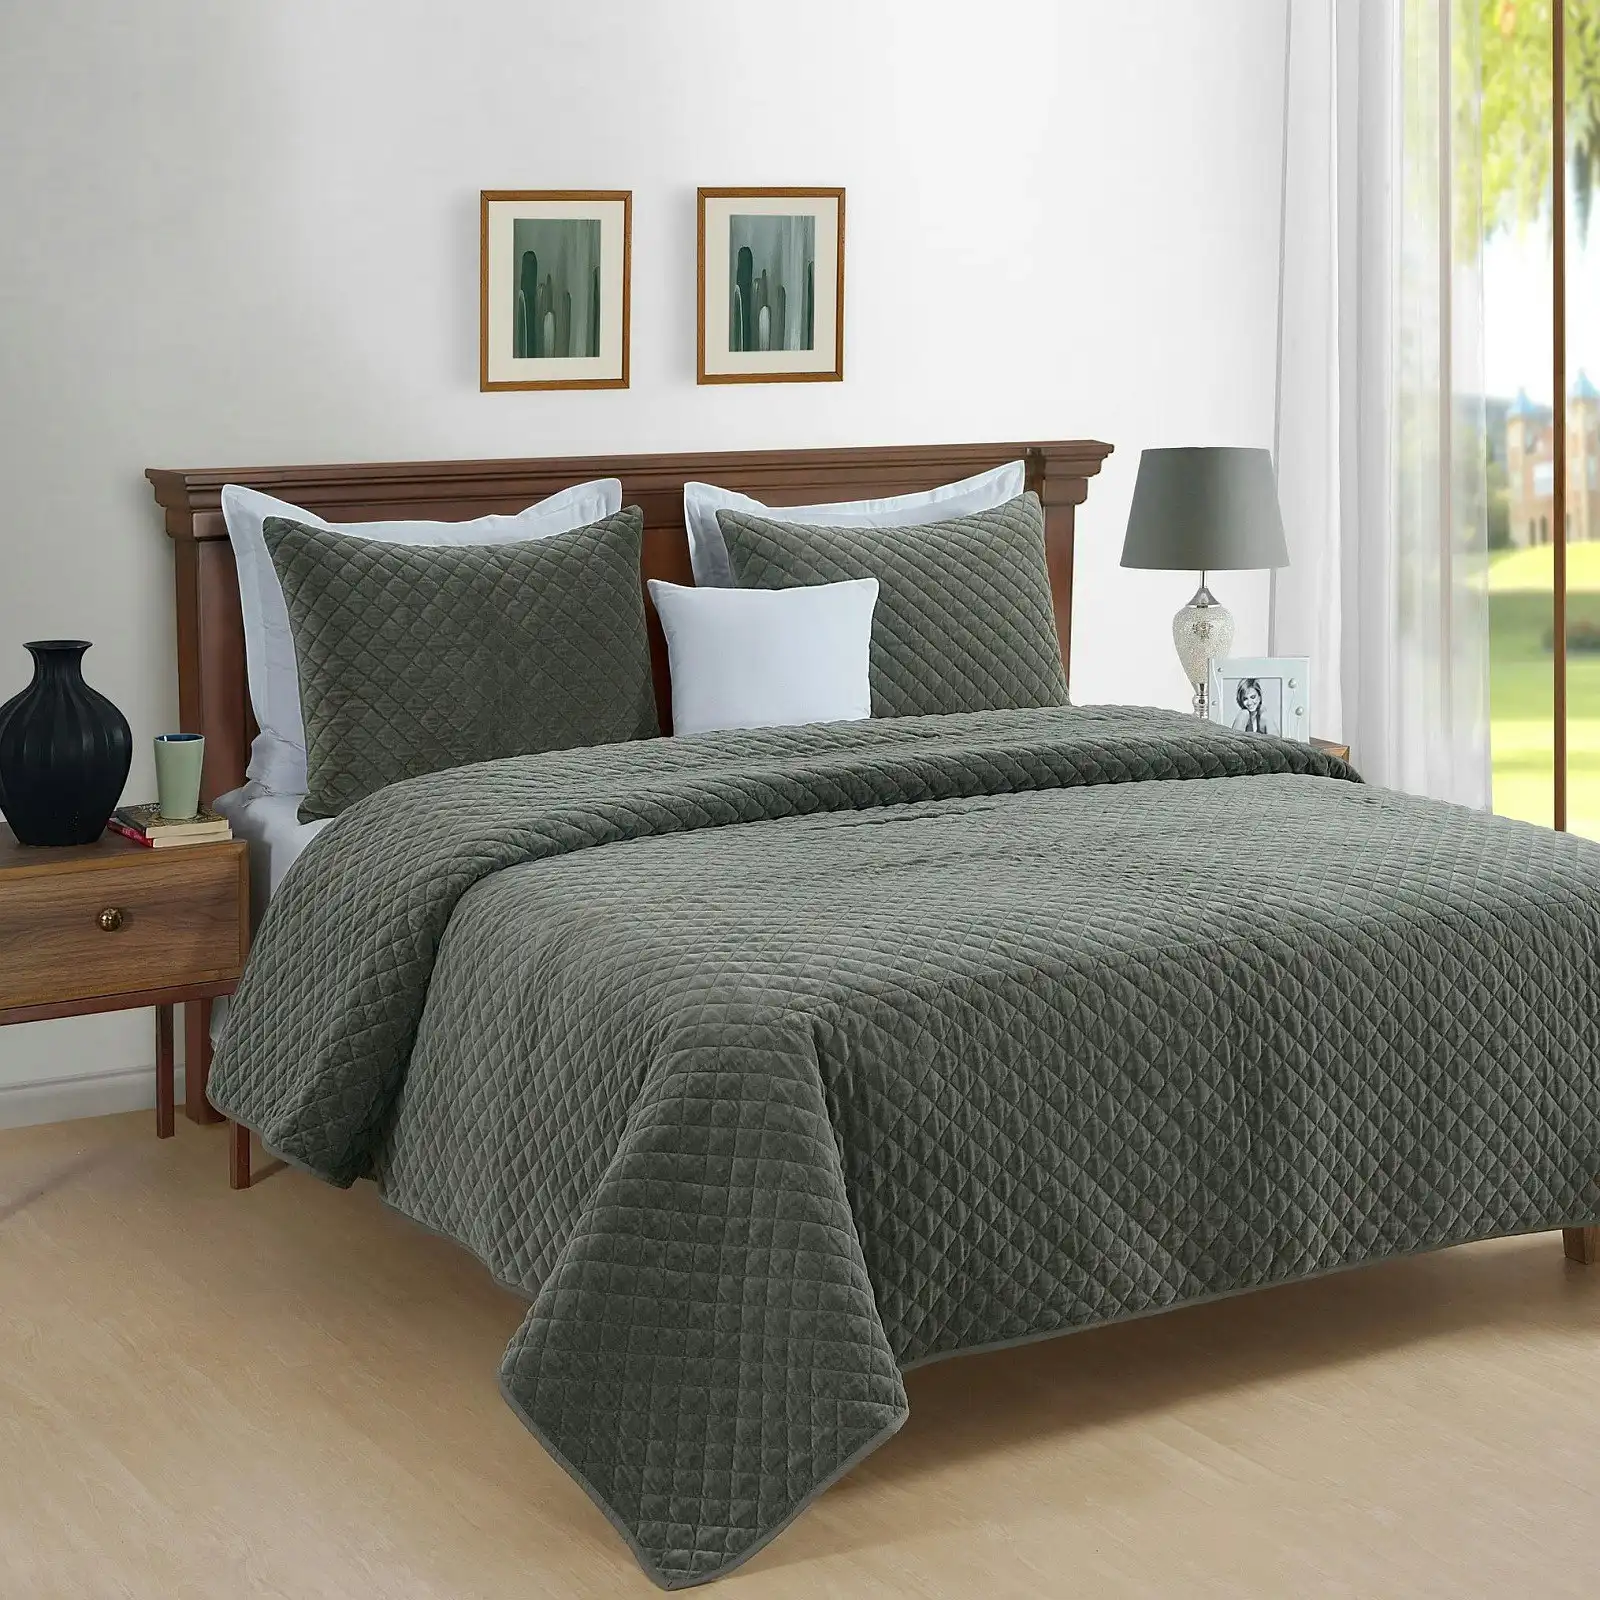 Park Avenue Amalia Home Queen Bed Quilted Comforter Set 150 GSM Cotton Velvet